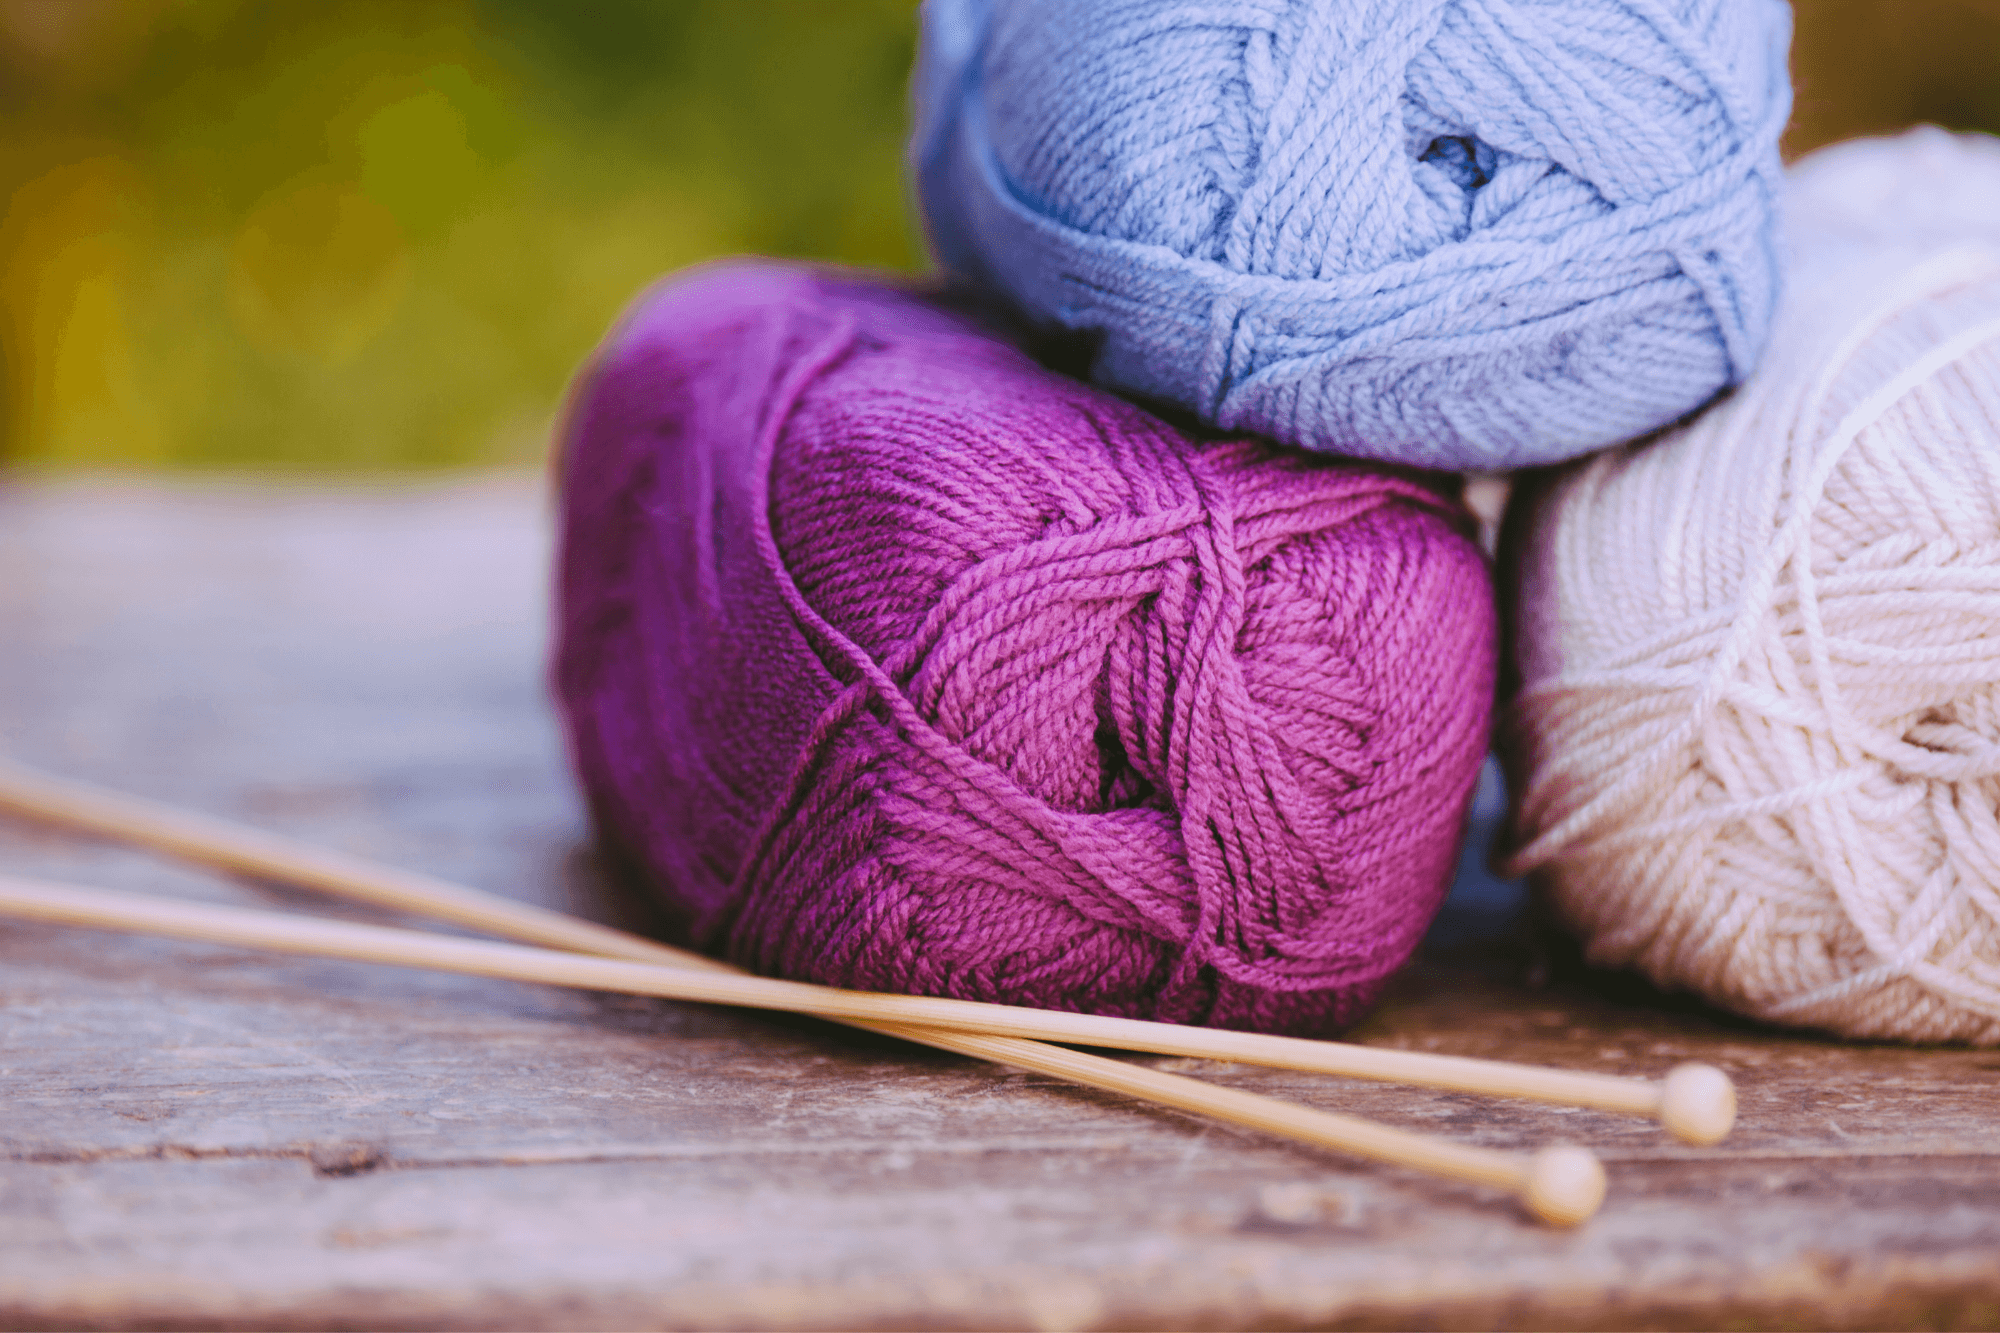 Beginner Knitter Tools and materials